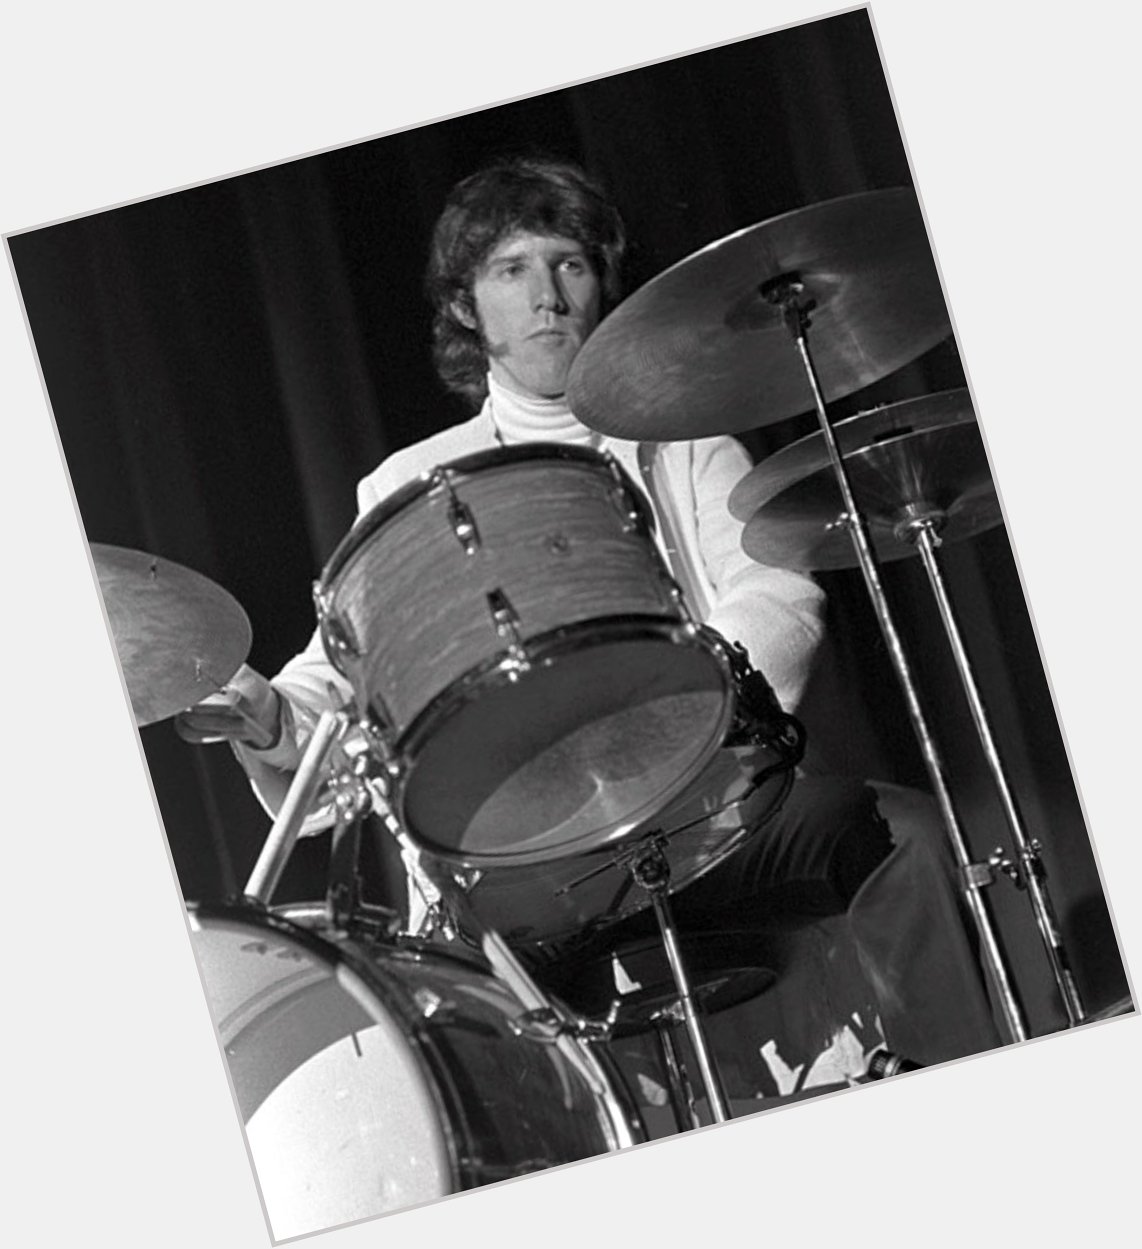 Happy birthday to drummer, John Densmore! 